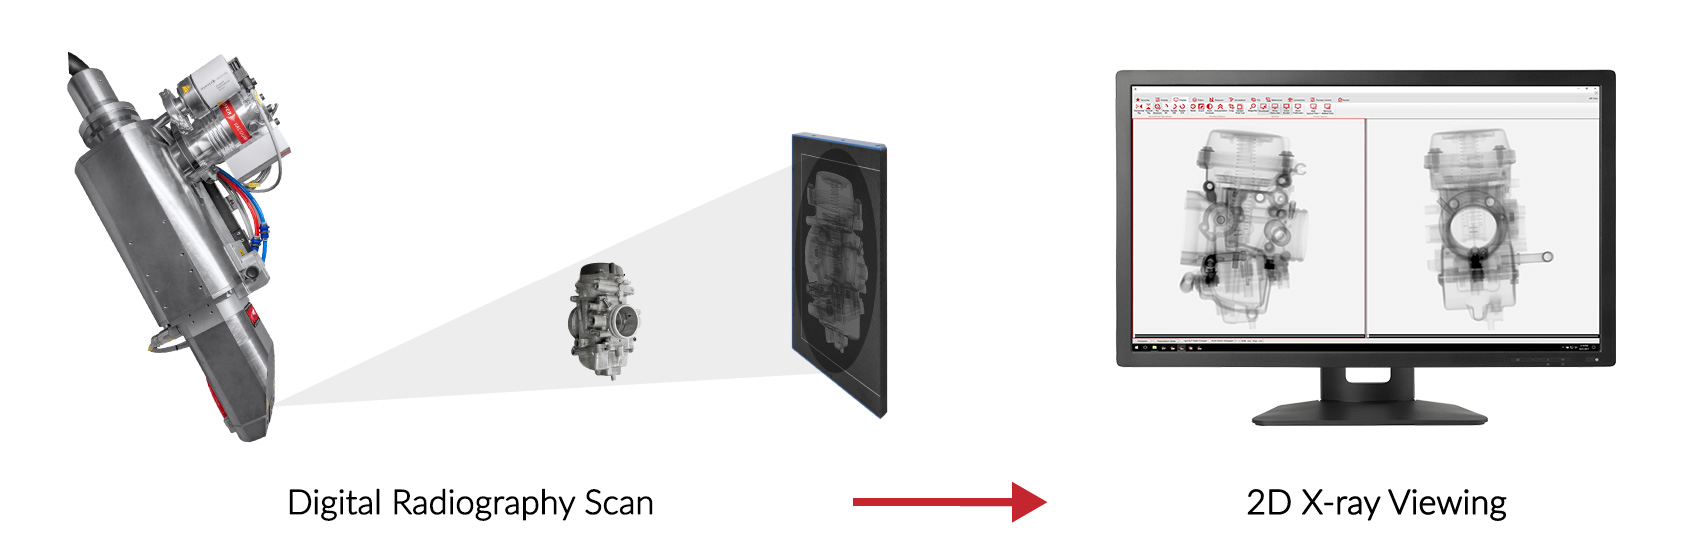 Digital radiography x-ray scan process